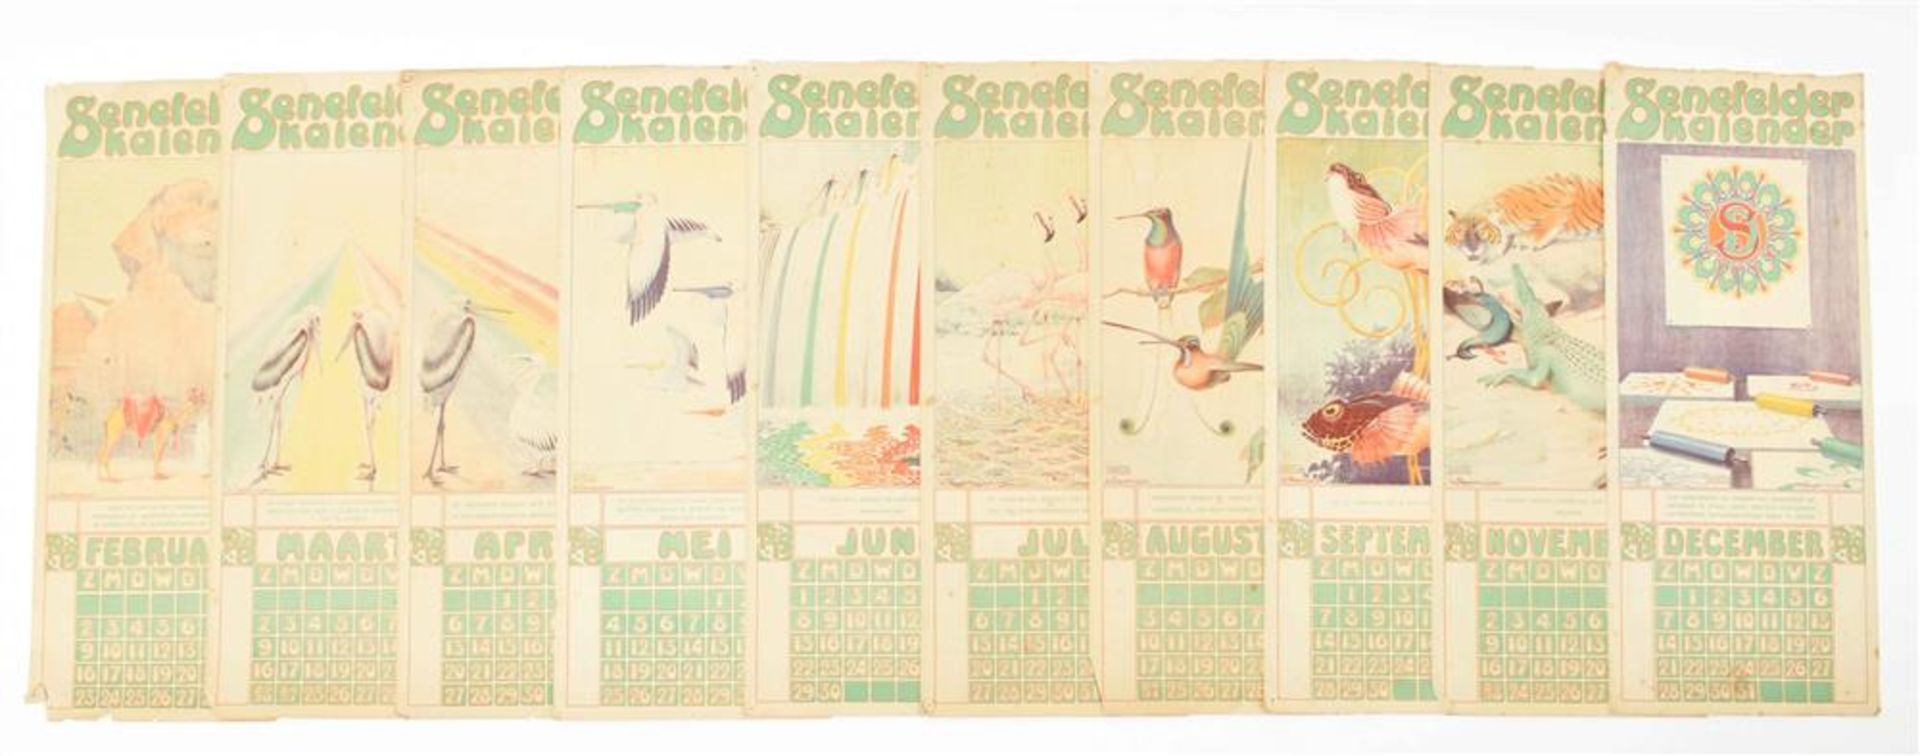 [Calendars] Five early twentieth century Senefelder Kalenders - Bild 2 aus 9